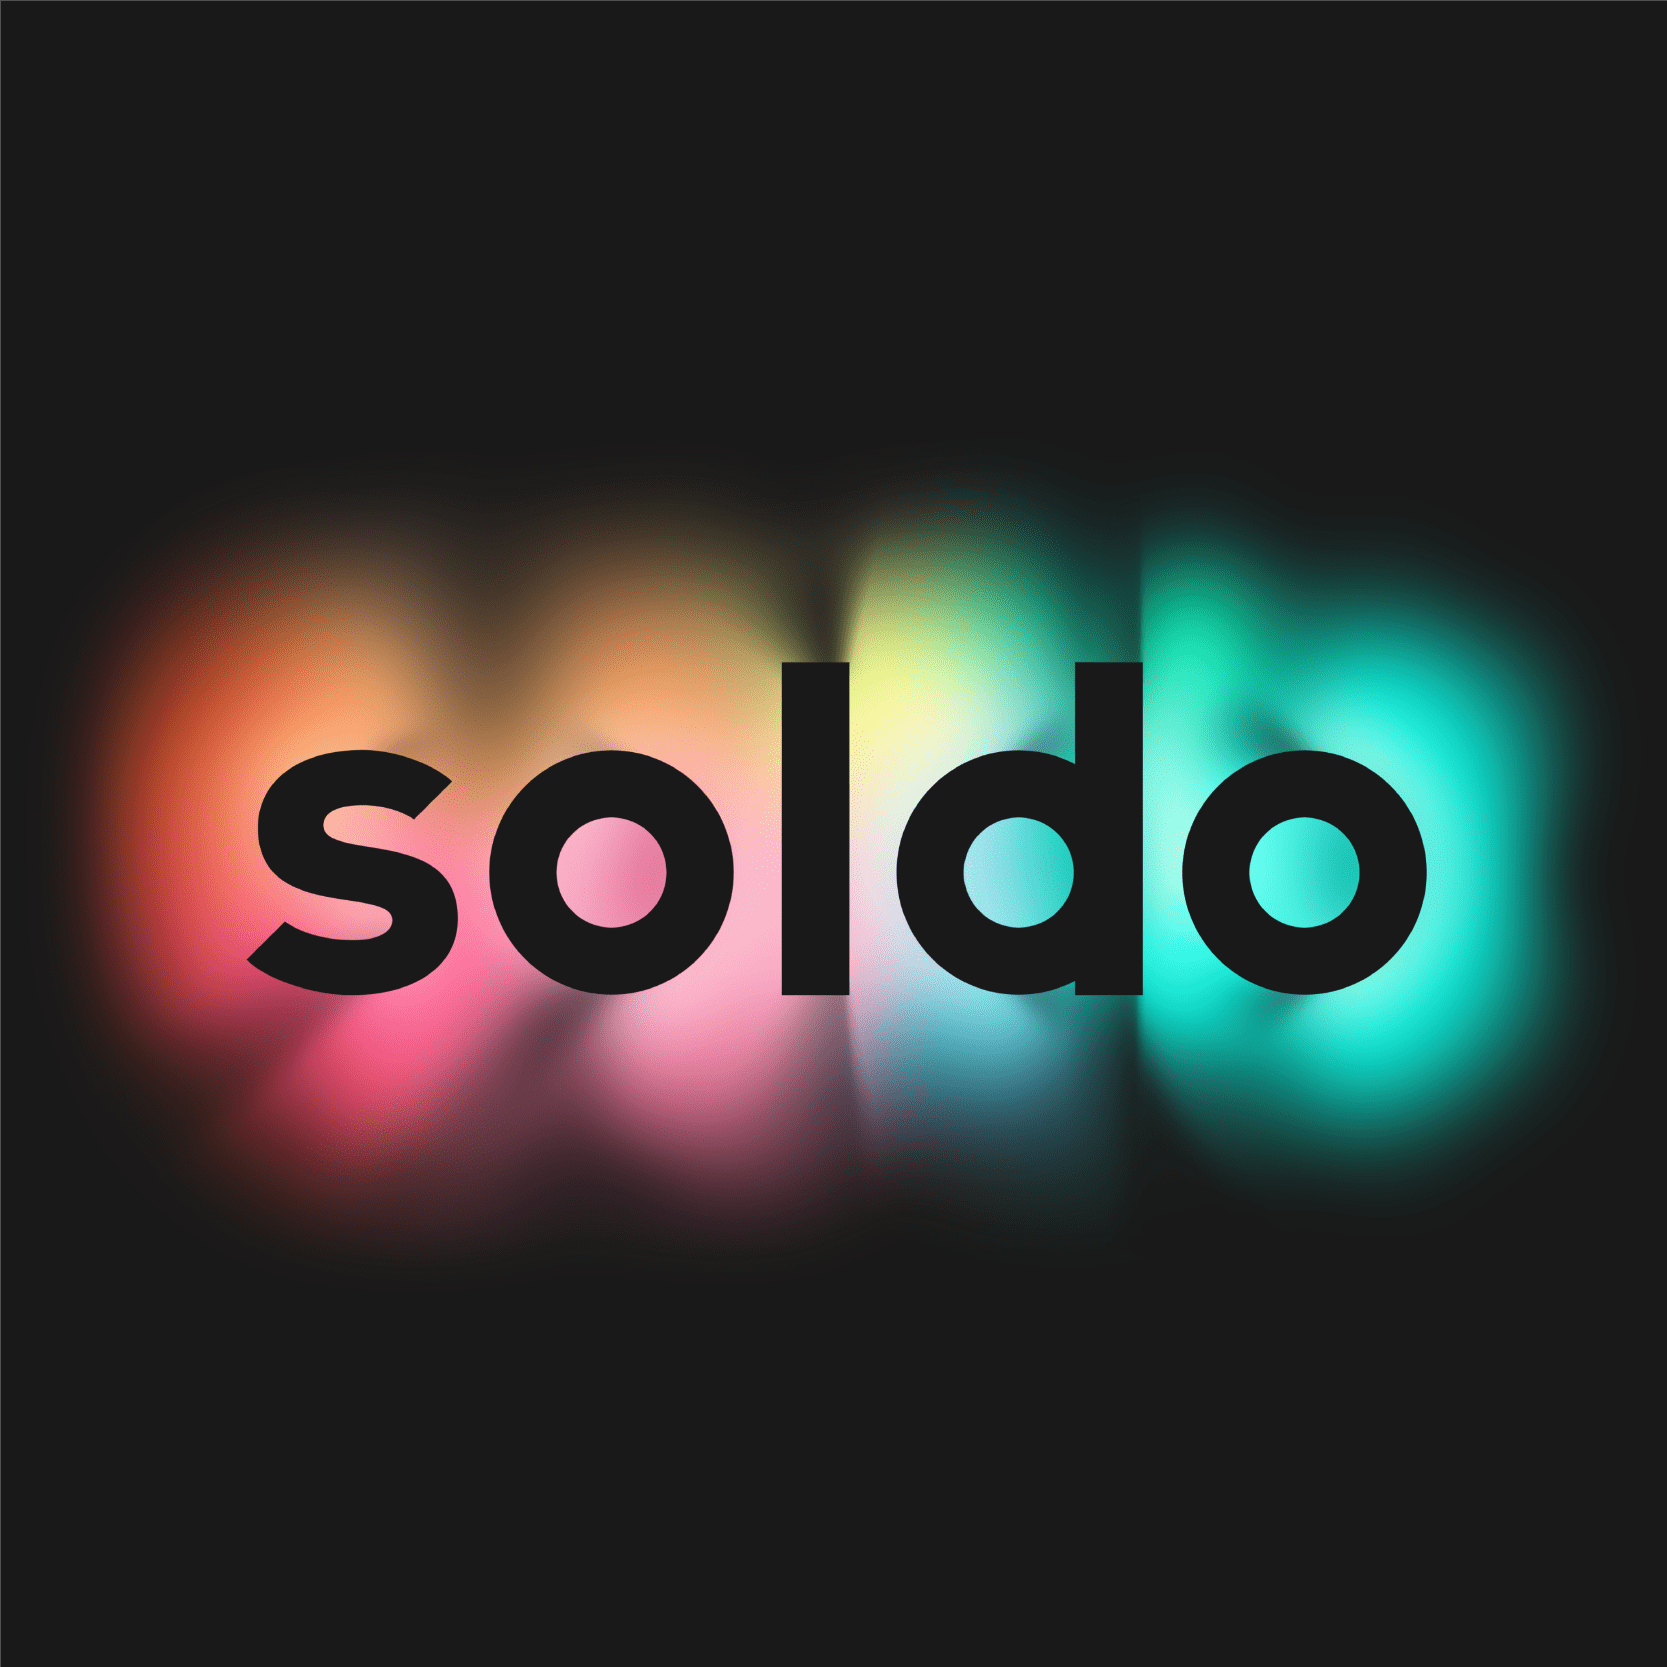 Soldo logo on black background